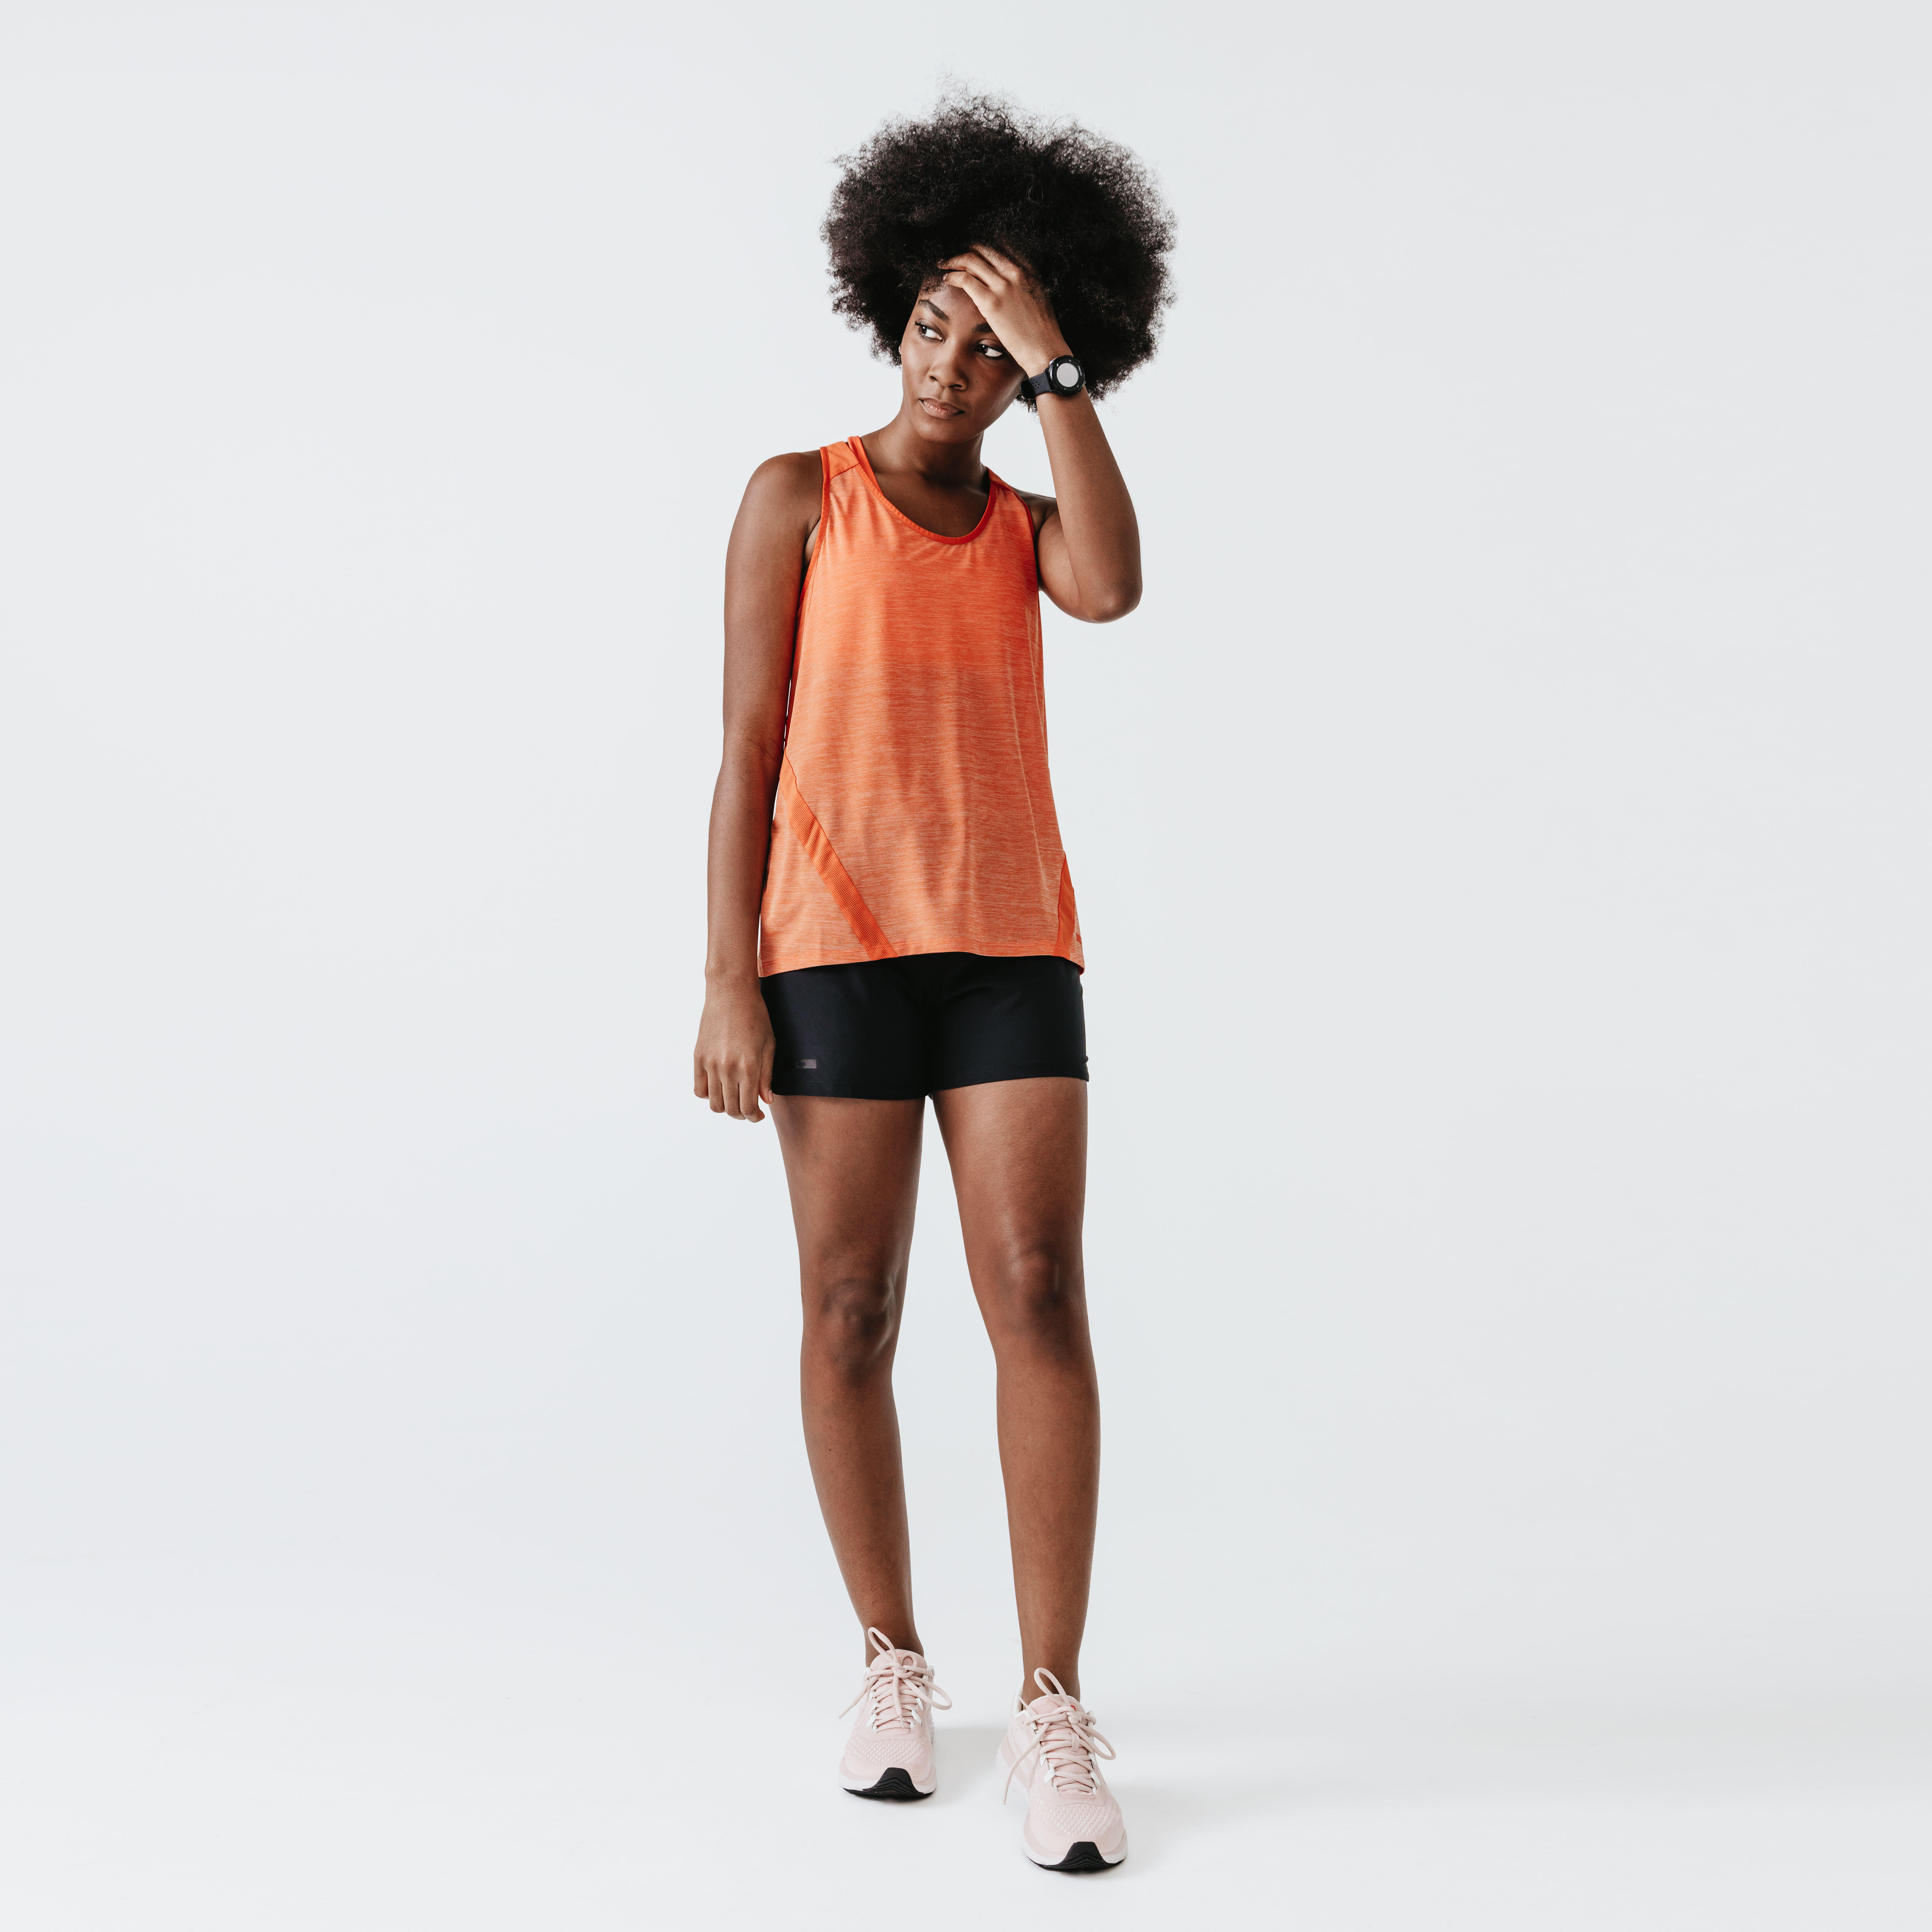 Women's Running Shorts - Run Dry Black - KALENJI